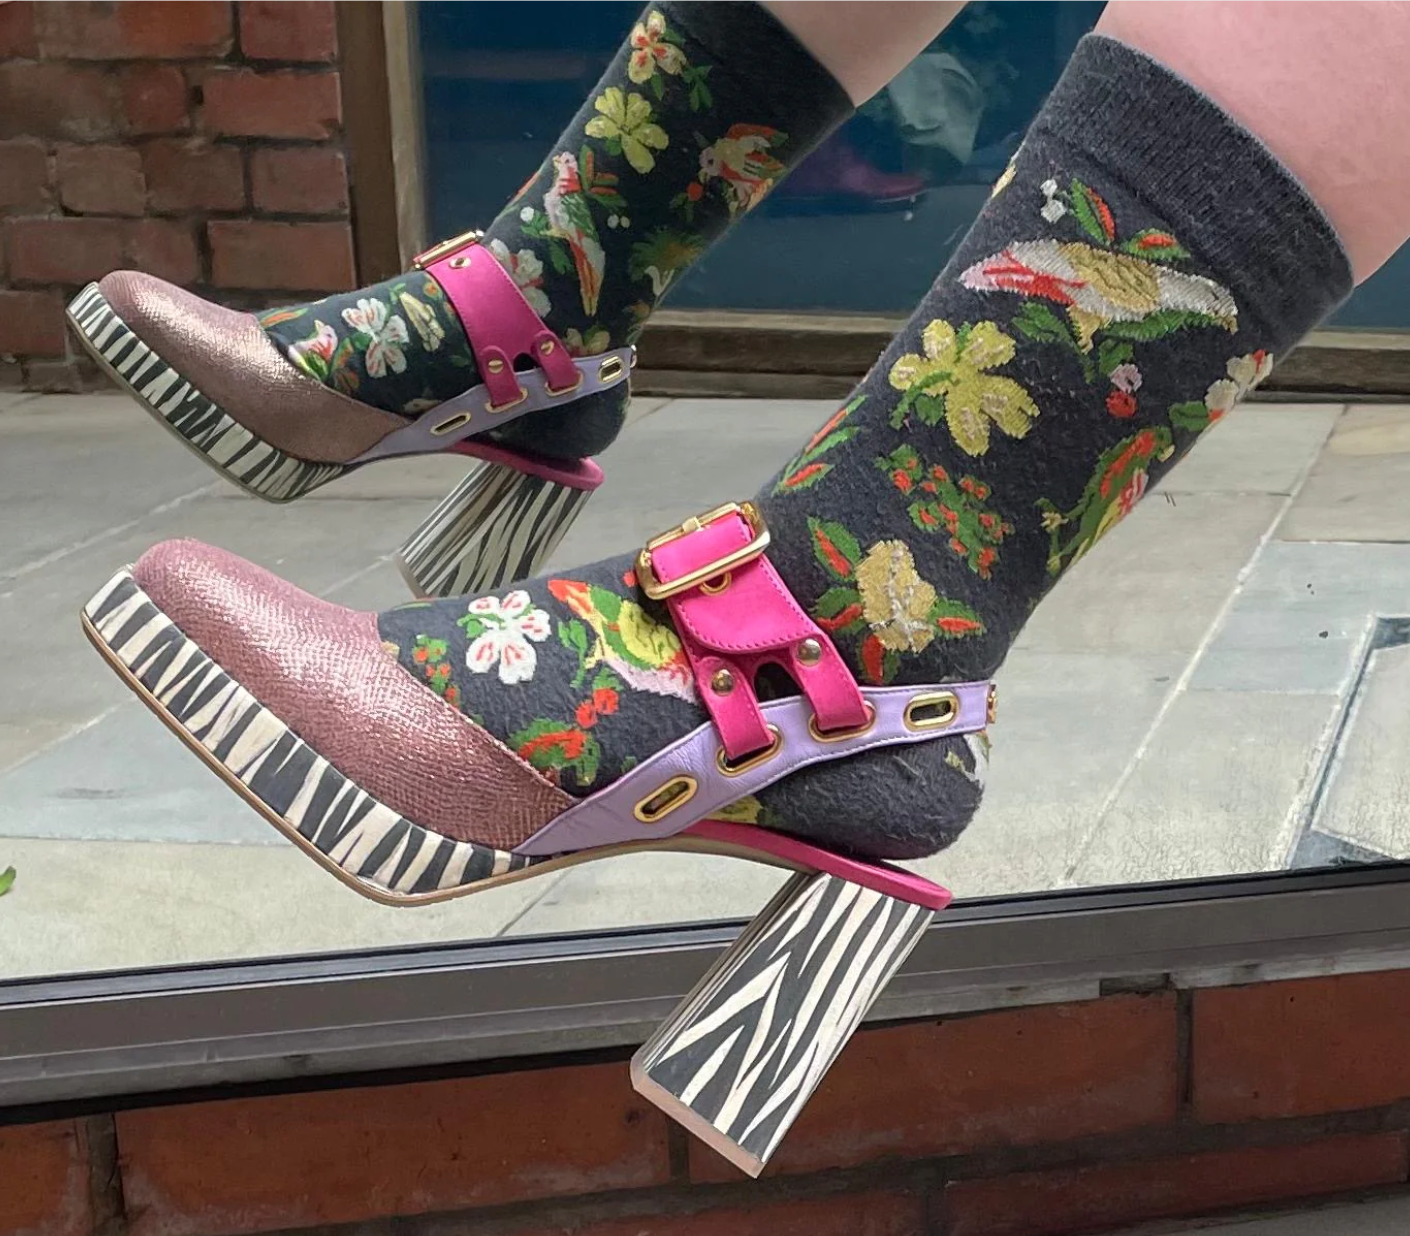 Chanii b "Le Patrone" Rose lilac platform sandal